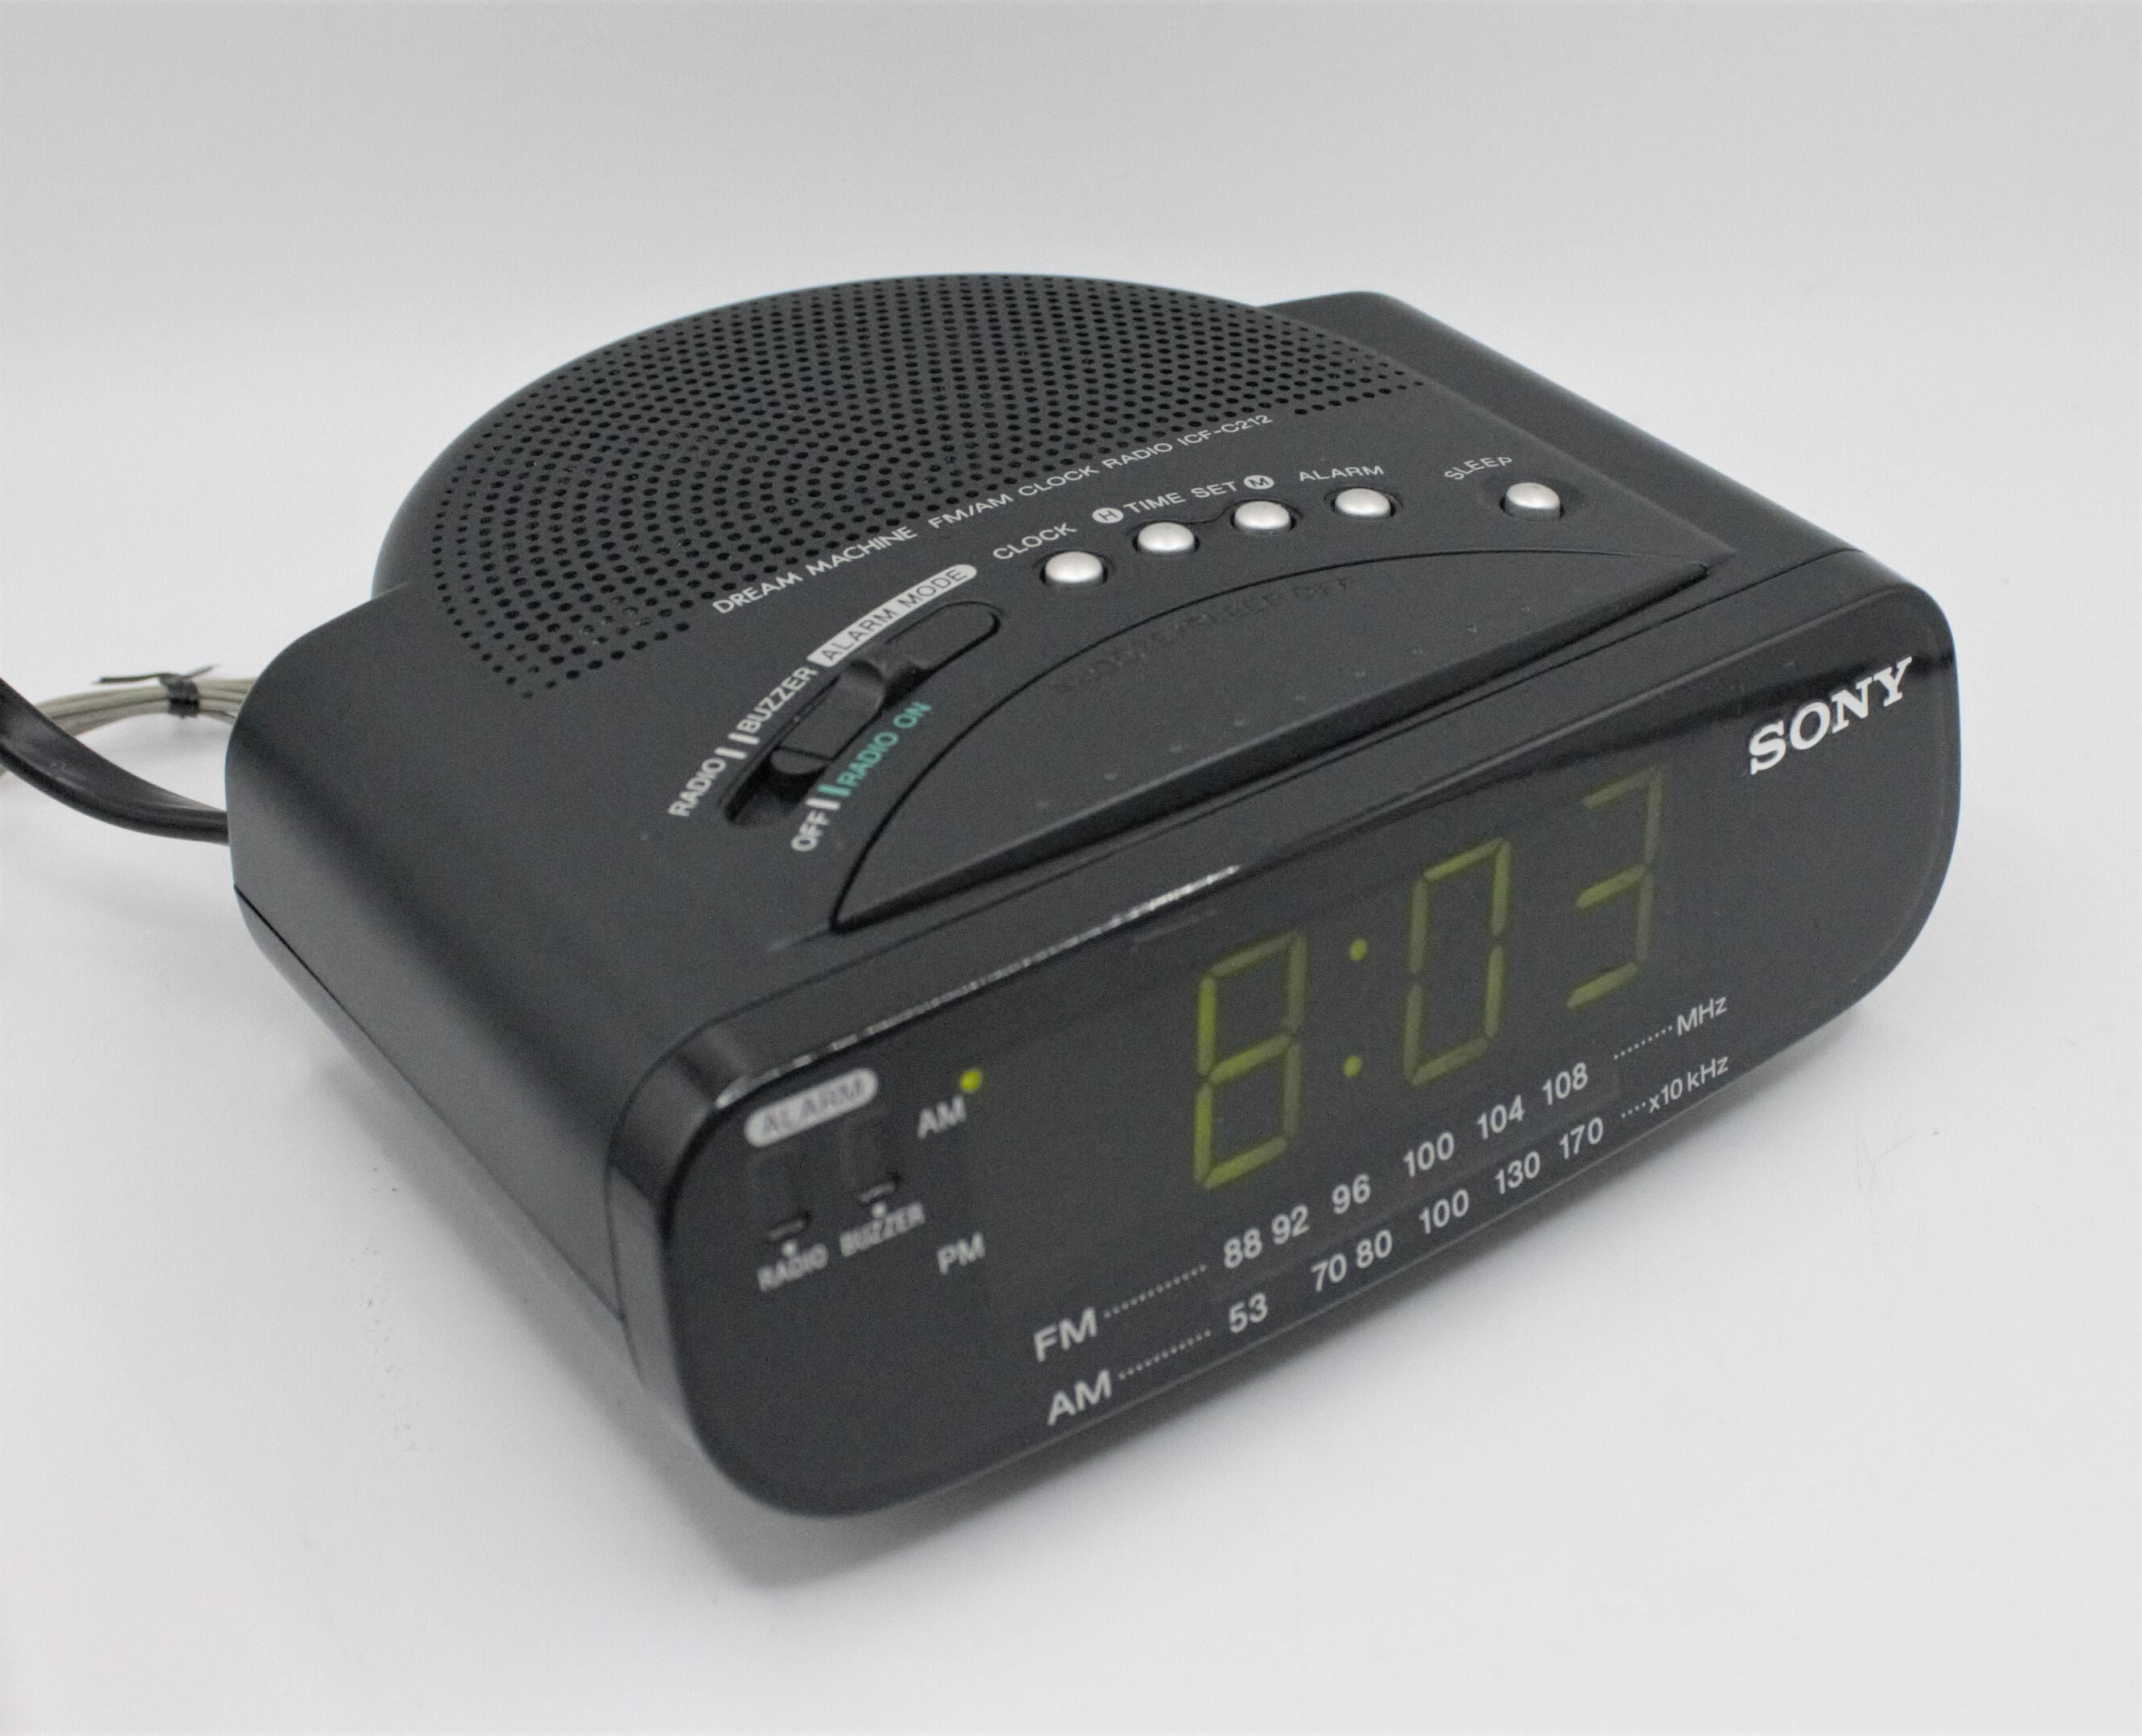 Sami RS-1004 Radio Reloj FM digital con Proyector